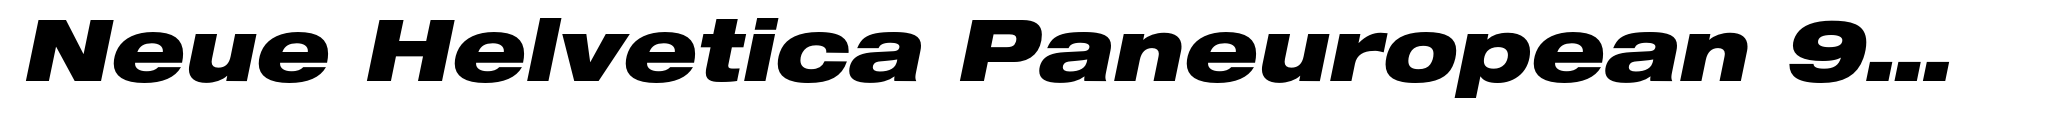 Neue Helvetica Paneuropean 93 Extended Black Oblique image